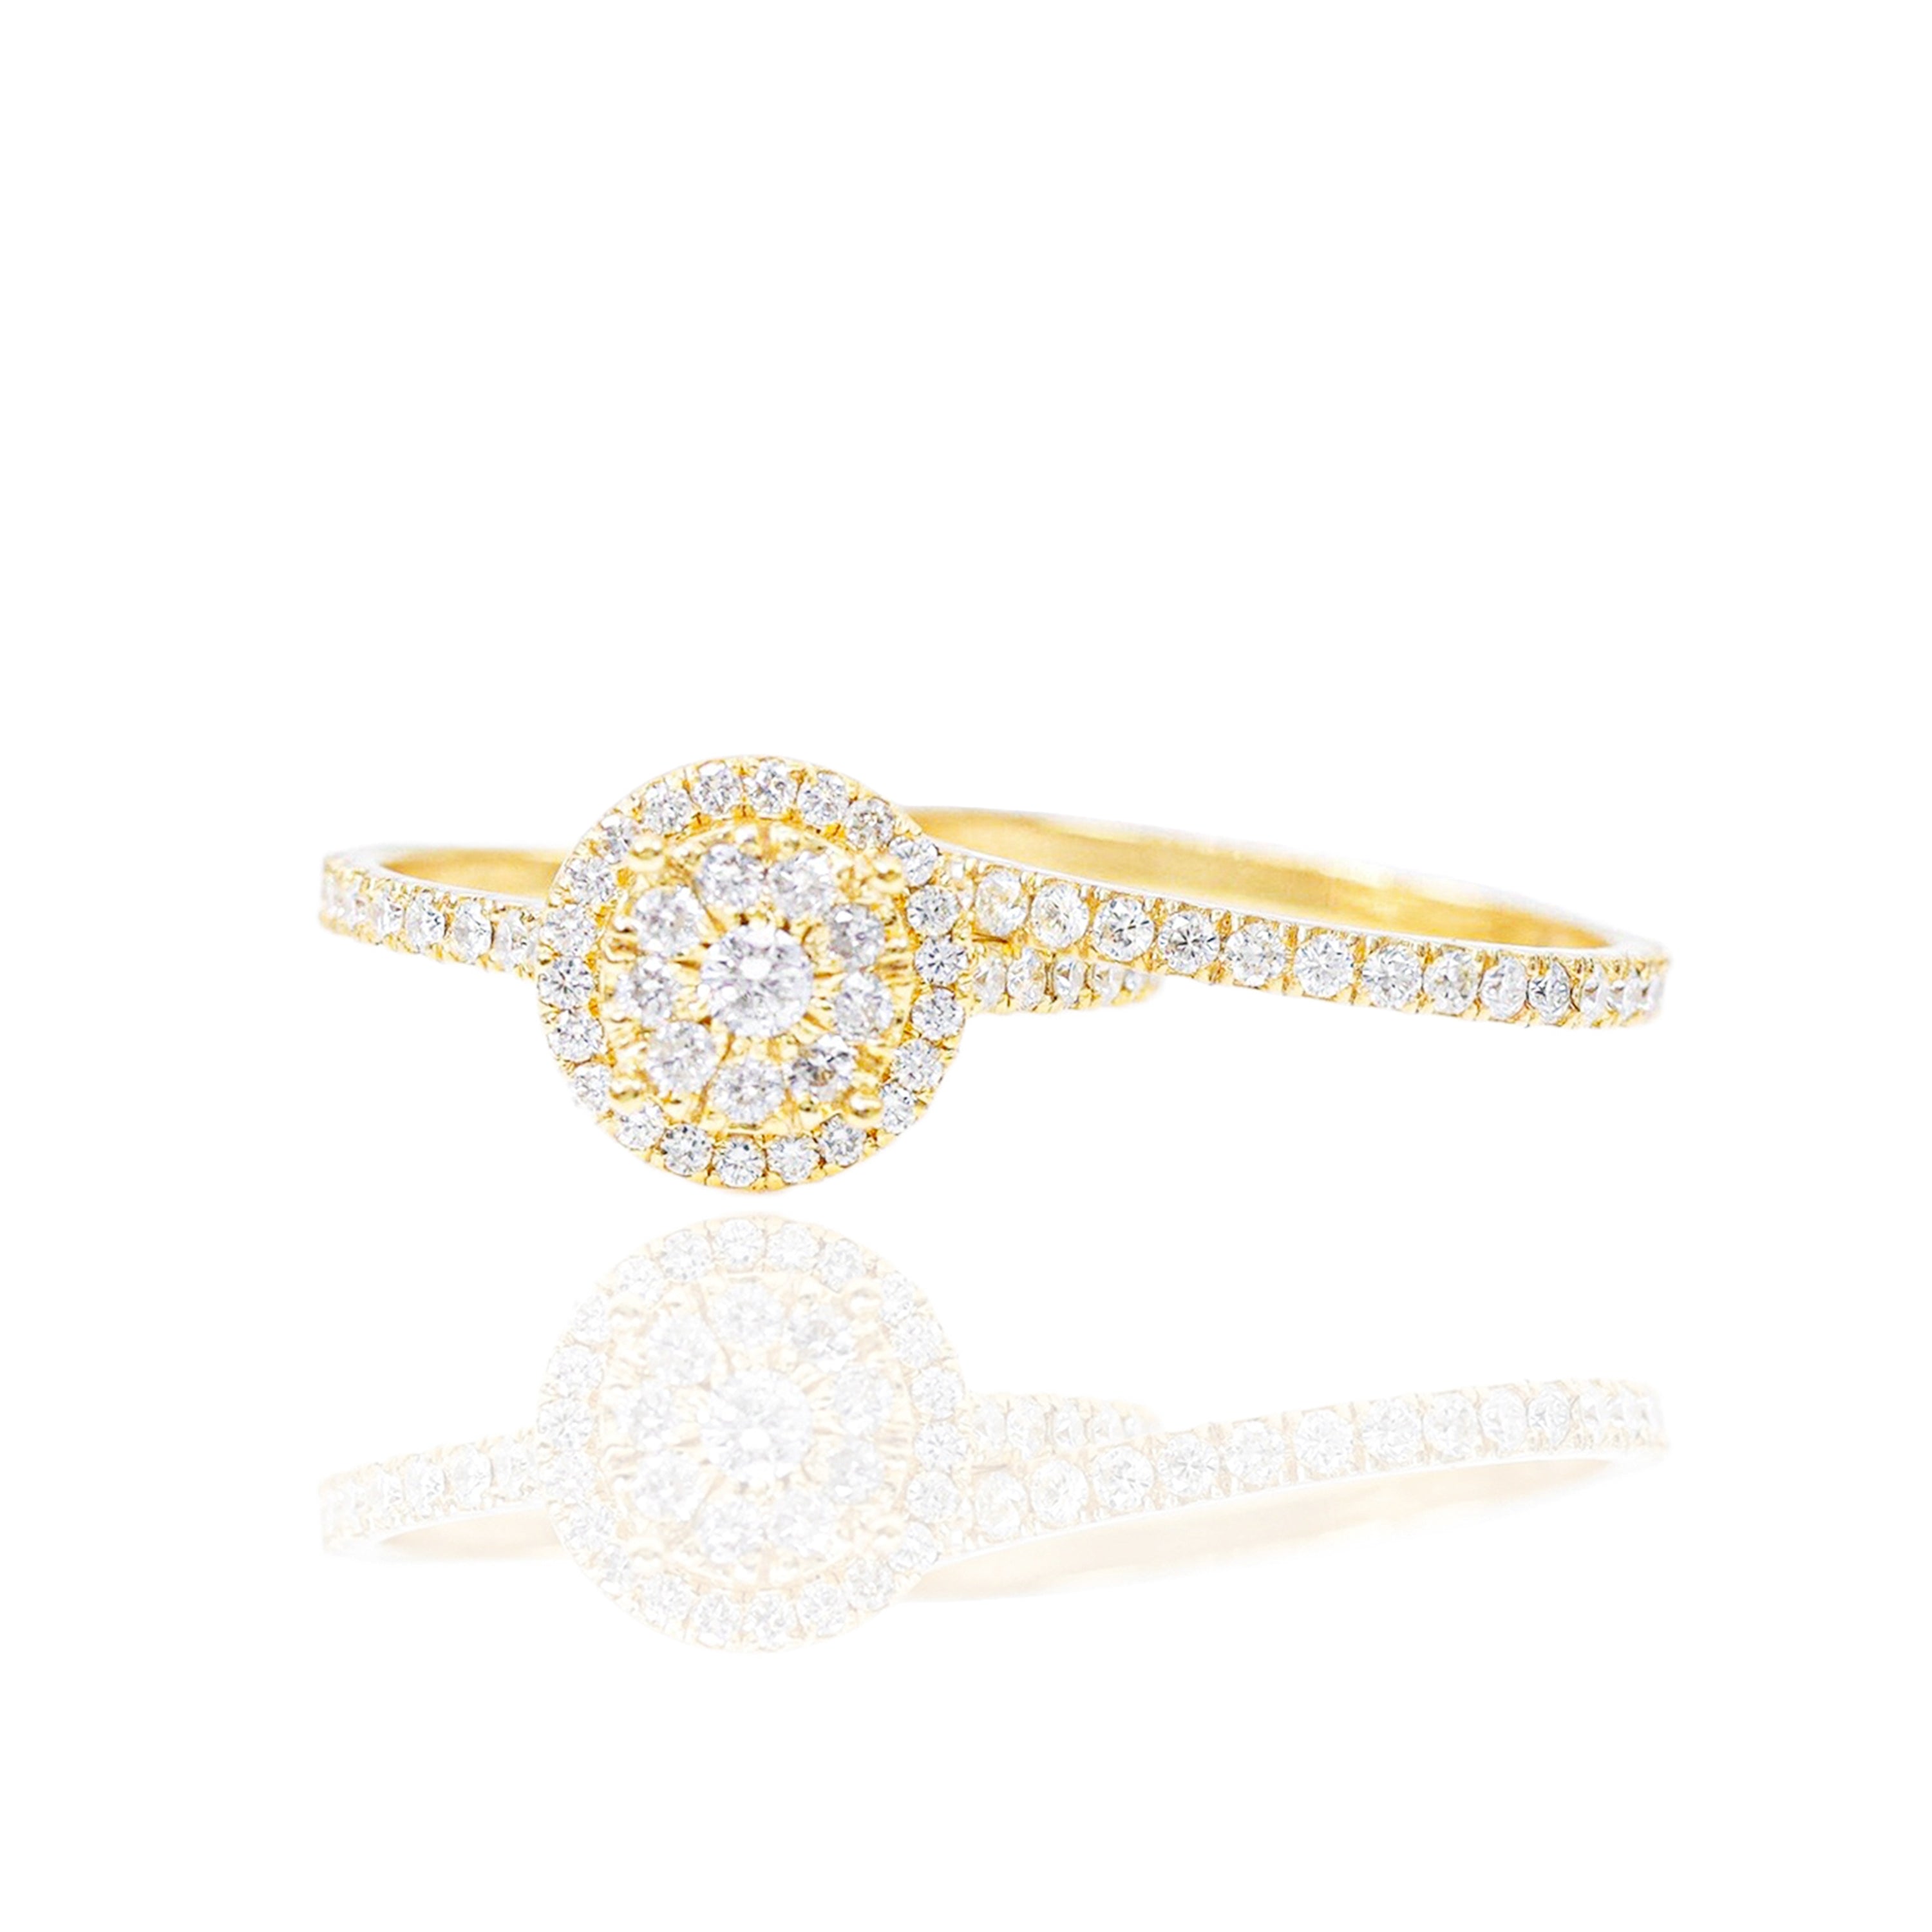 Round Shape with Halo Diamond Engagement Ring